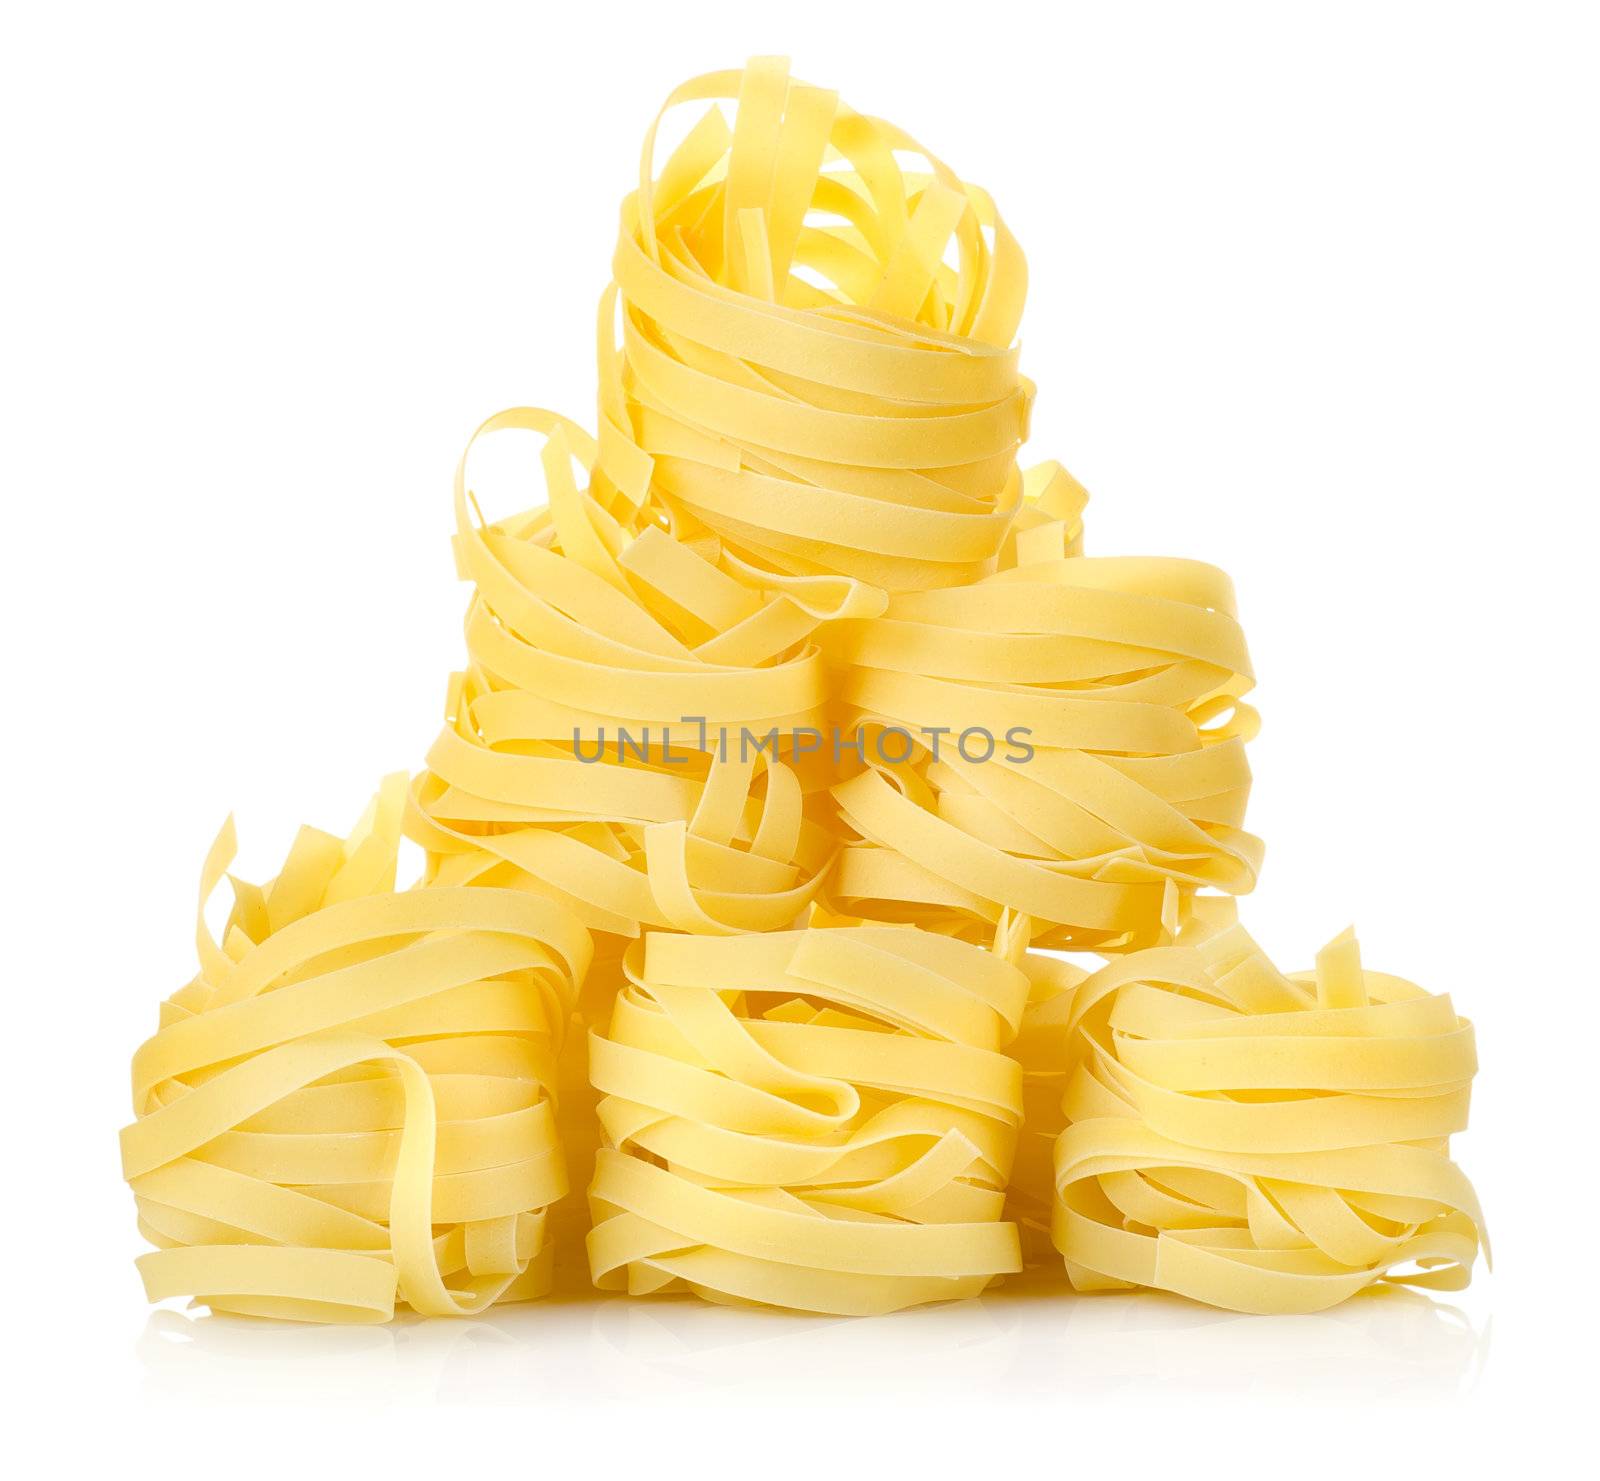 Pile of pasta tagliatelle by Givaga